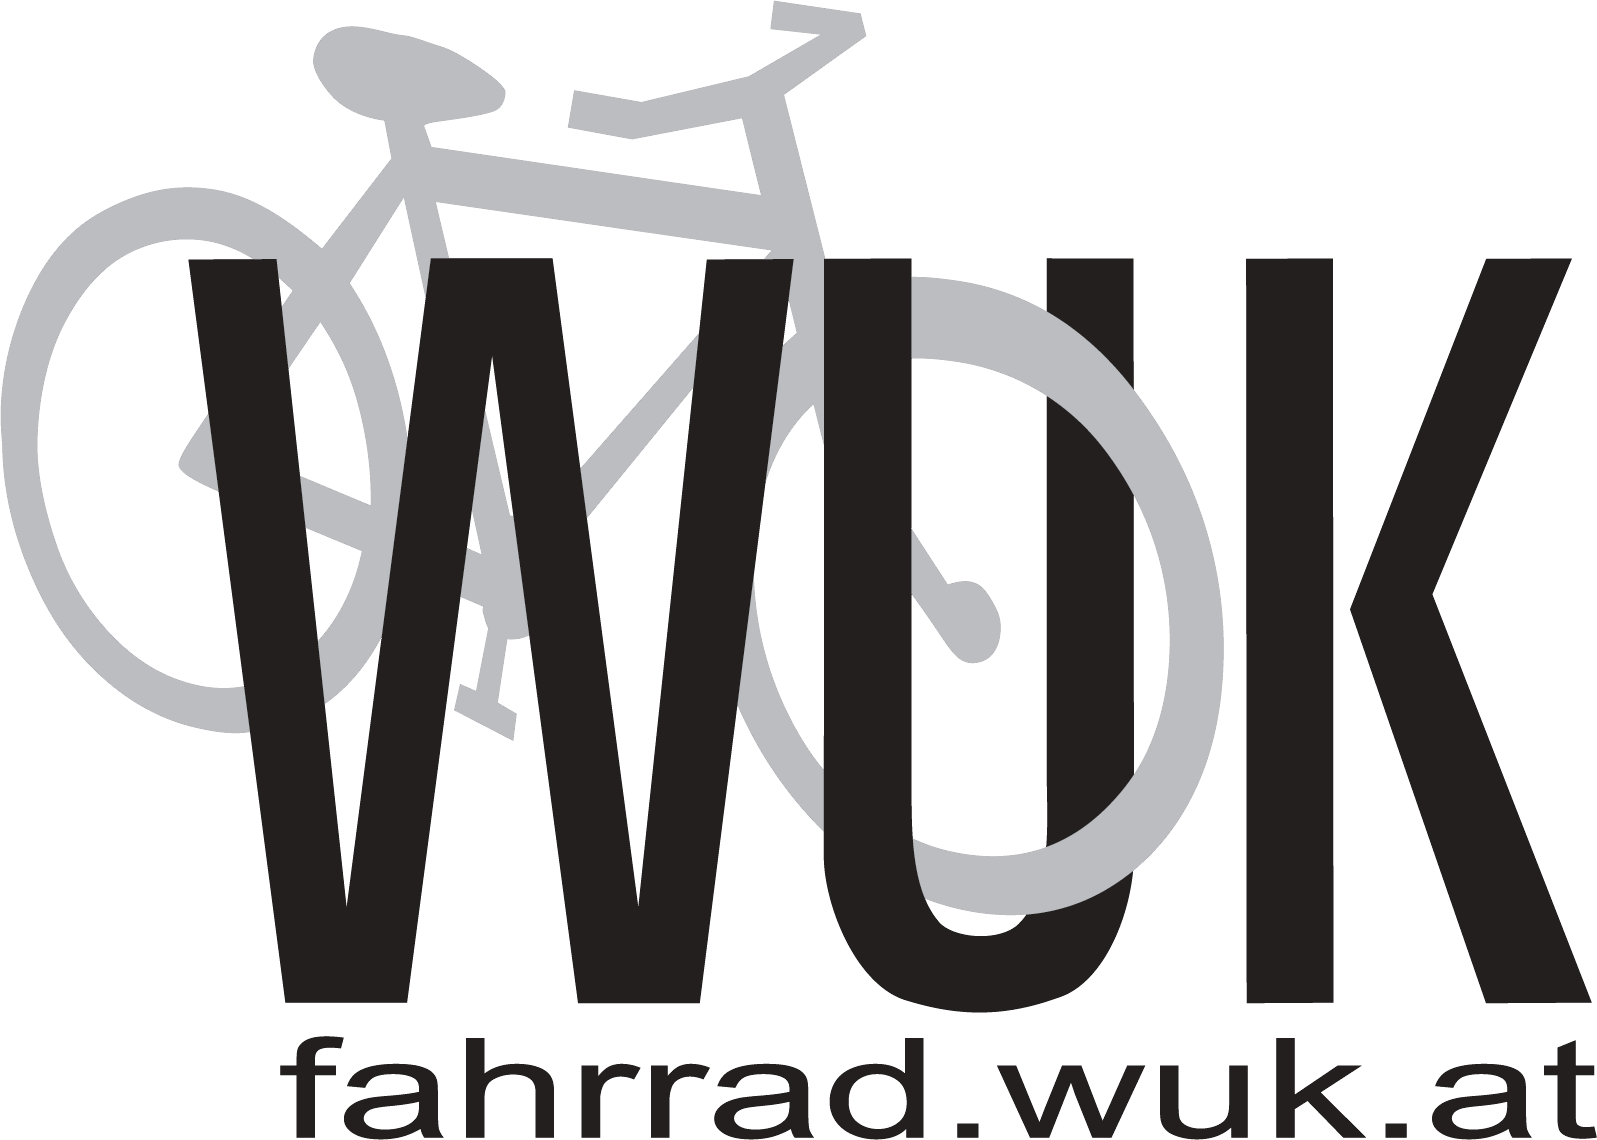 Bicycle-DIY-Workshop Vienna logo